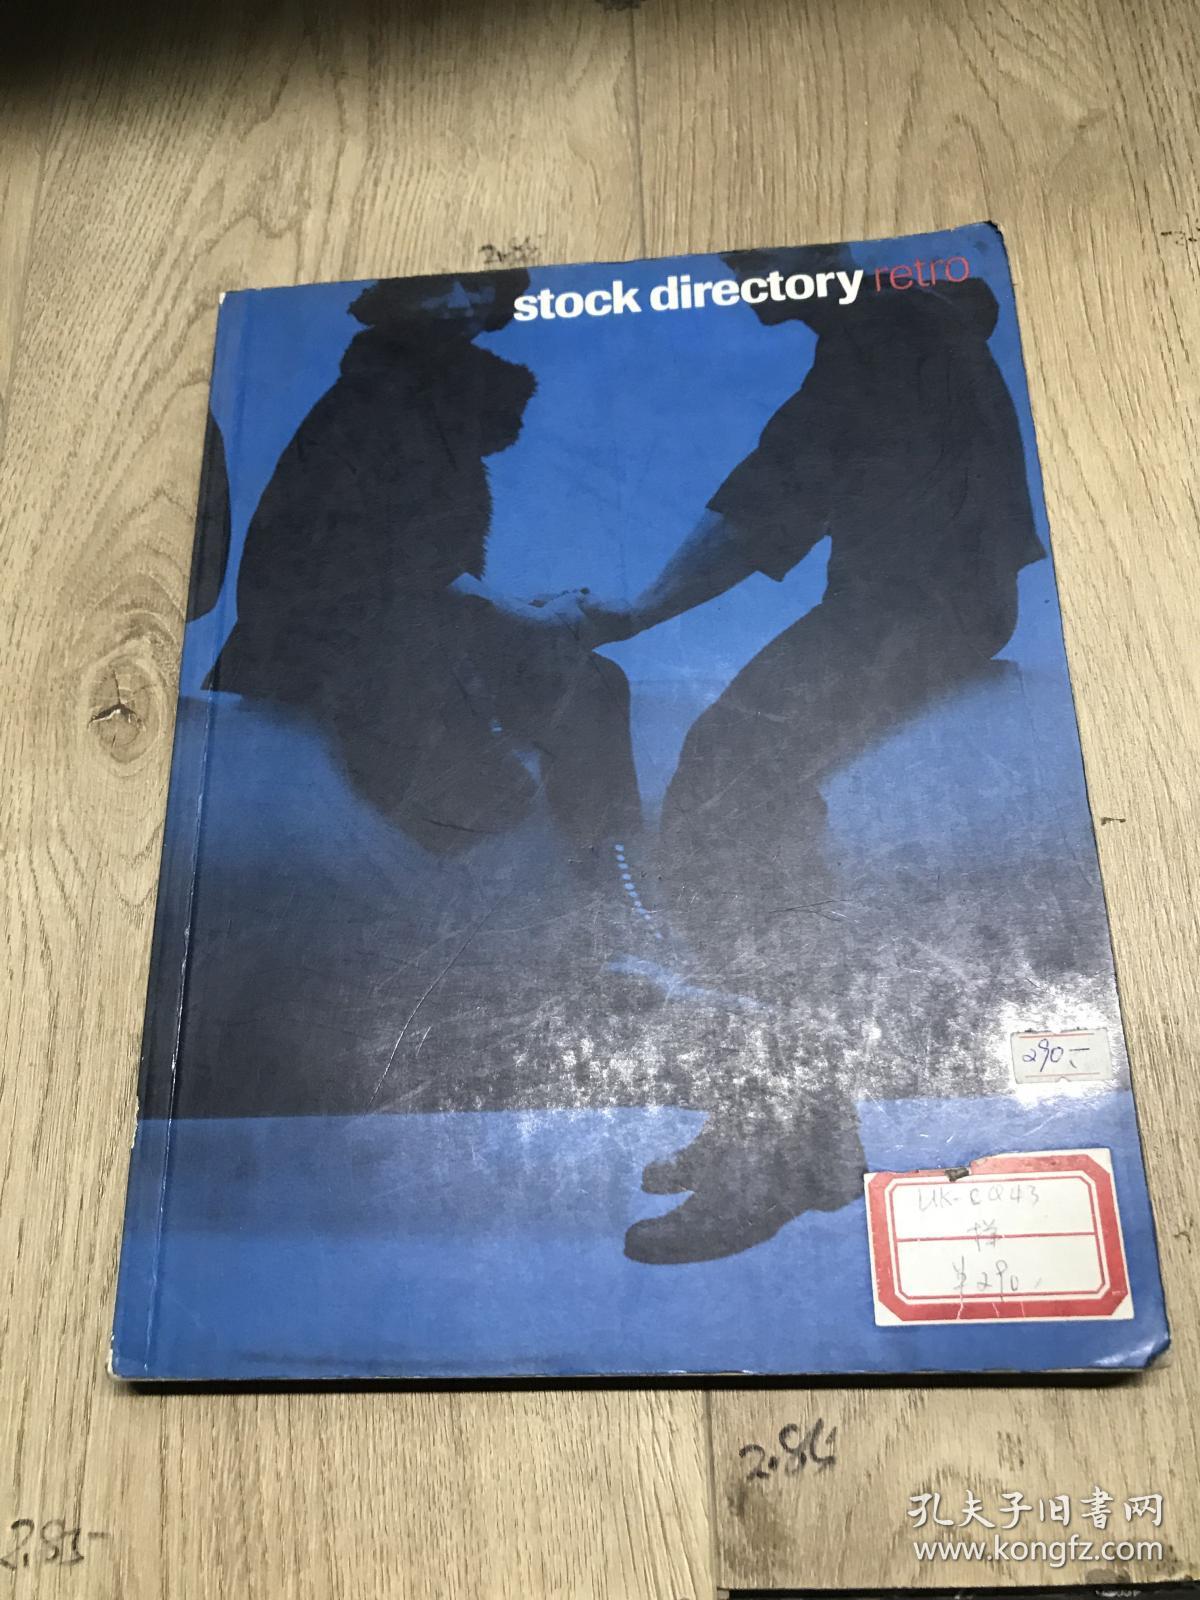 retro stock directory 英文原版《复古库存目录》